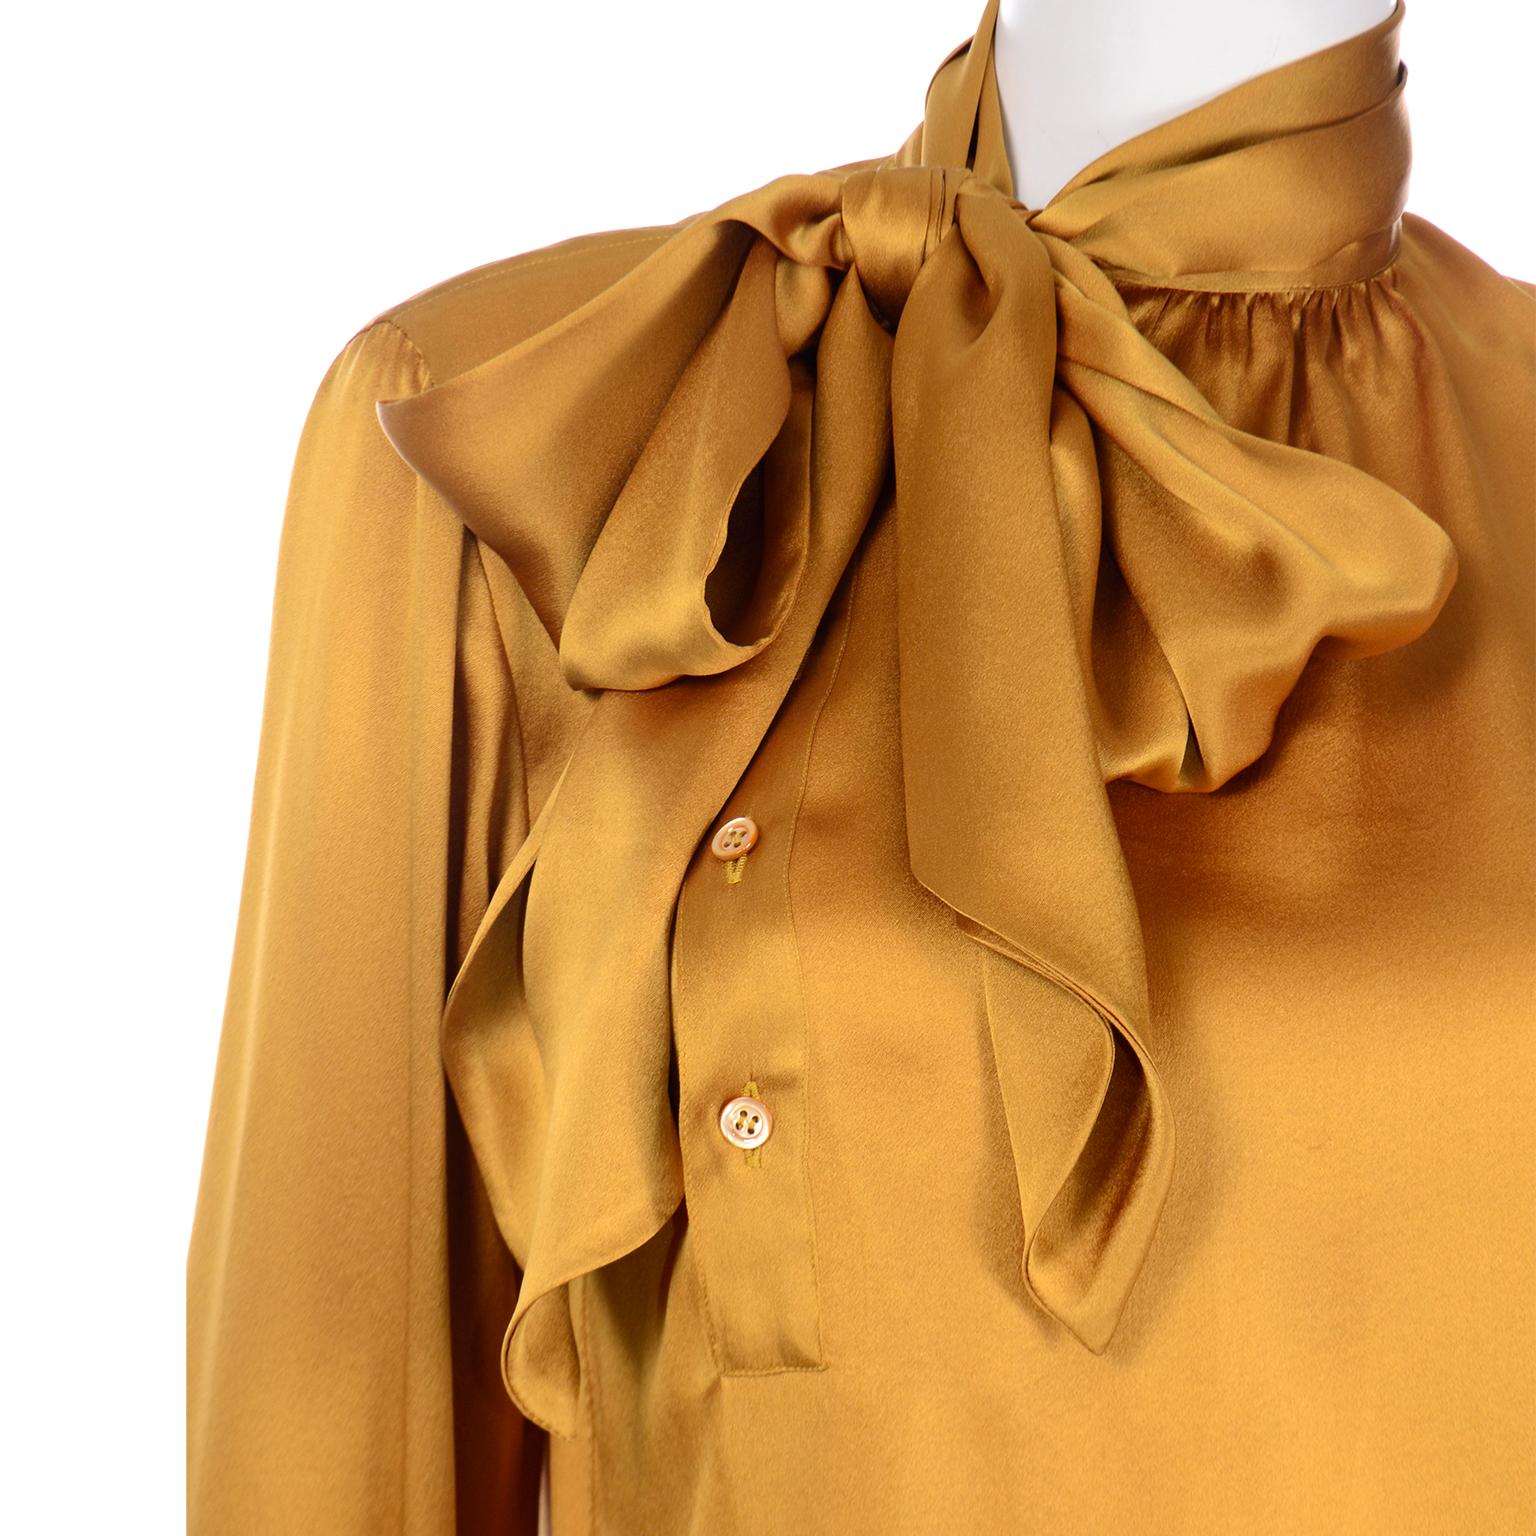 Yves Saint Laurent Silk Charmeuse Gold Blouse w Sash & Belt For Sale 7